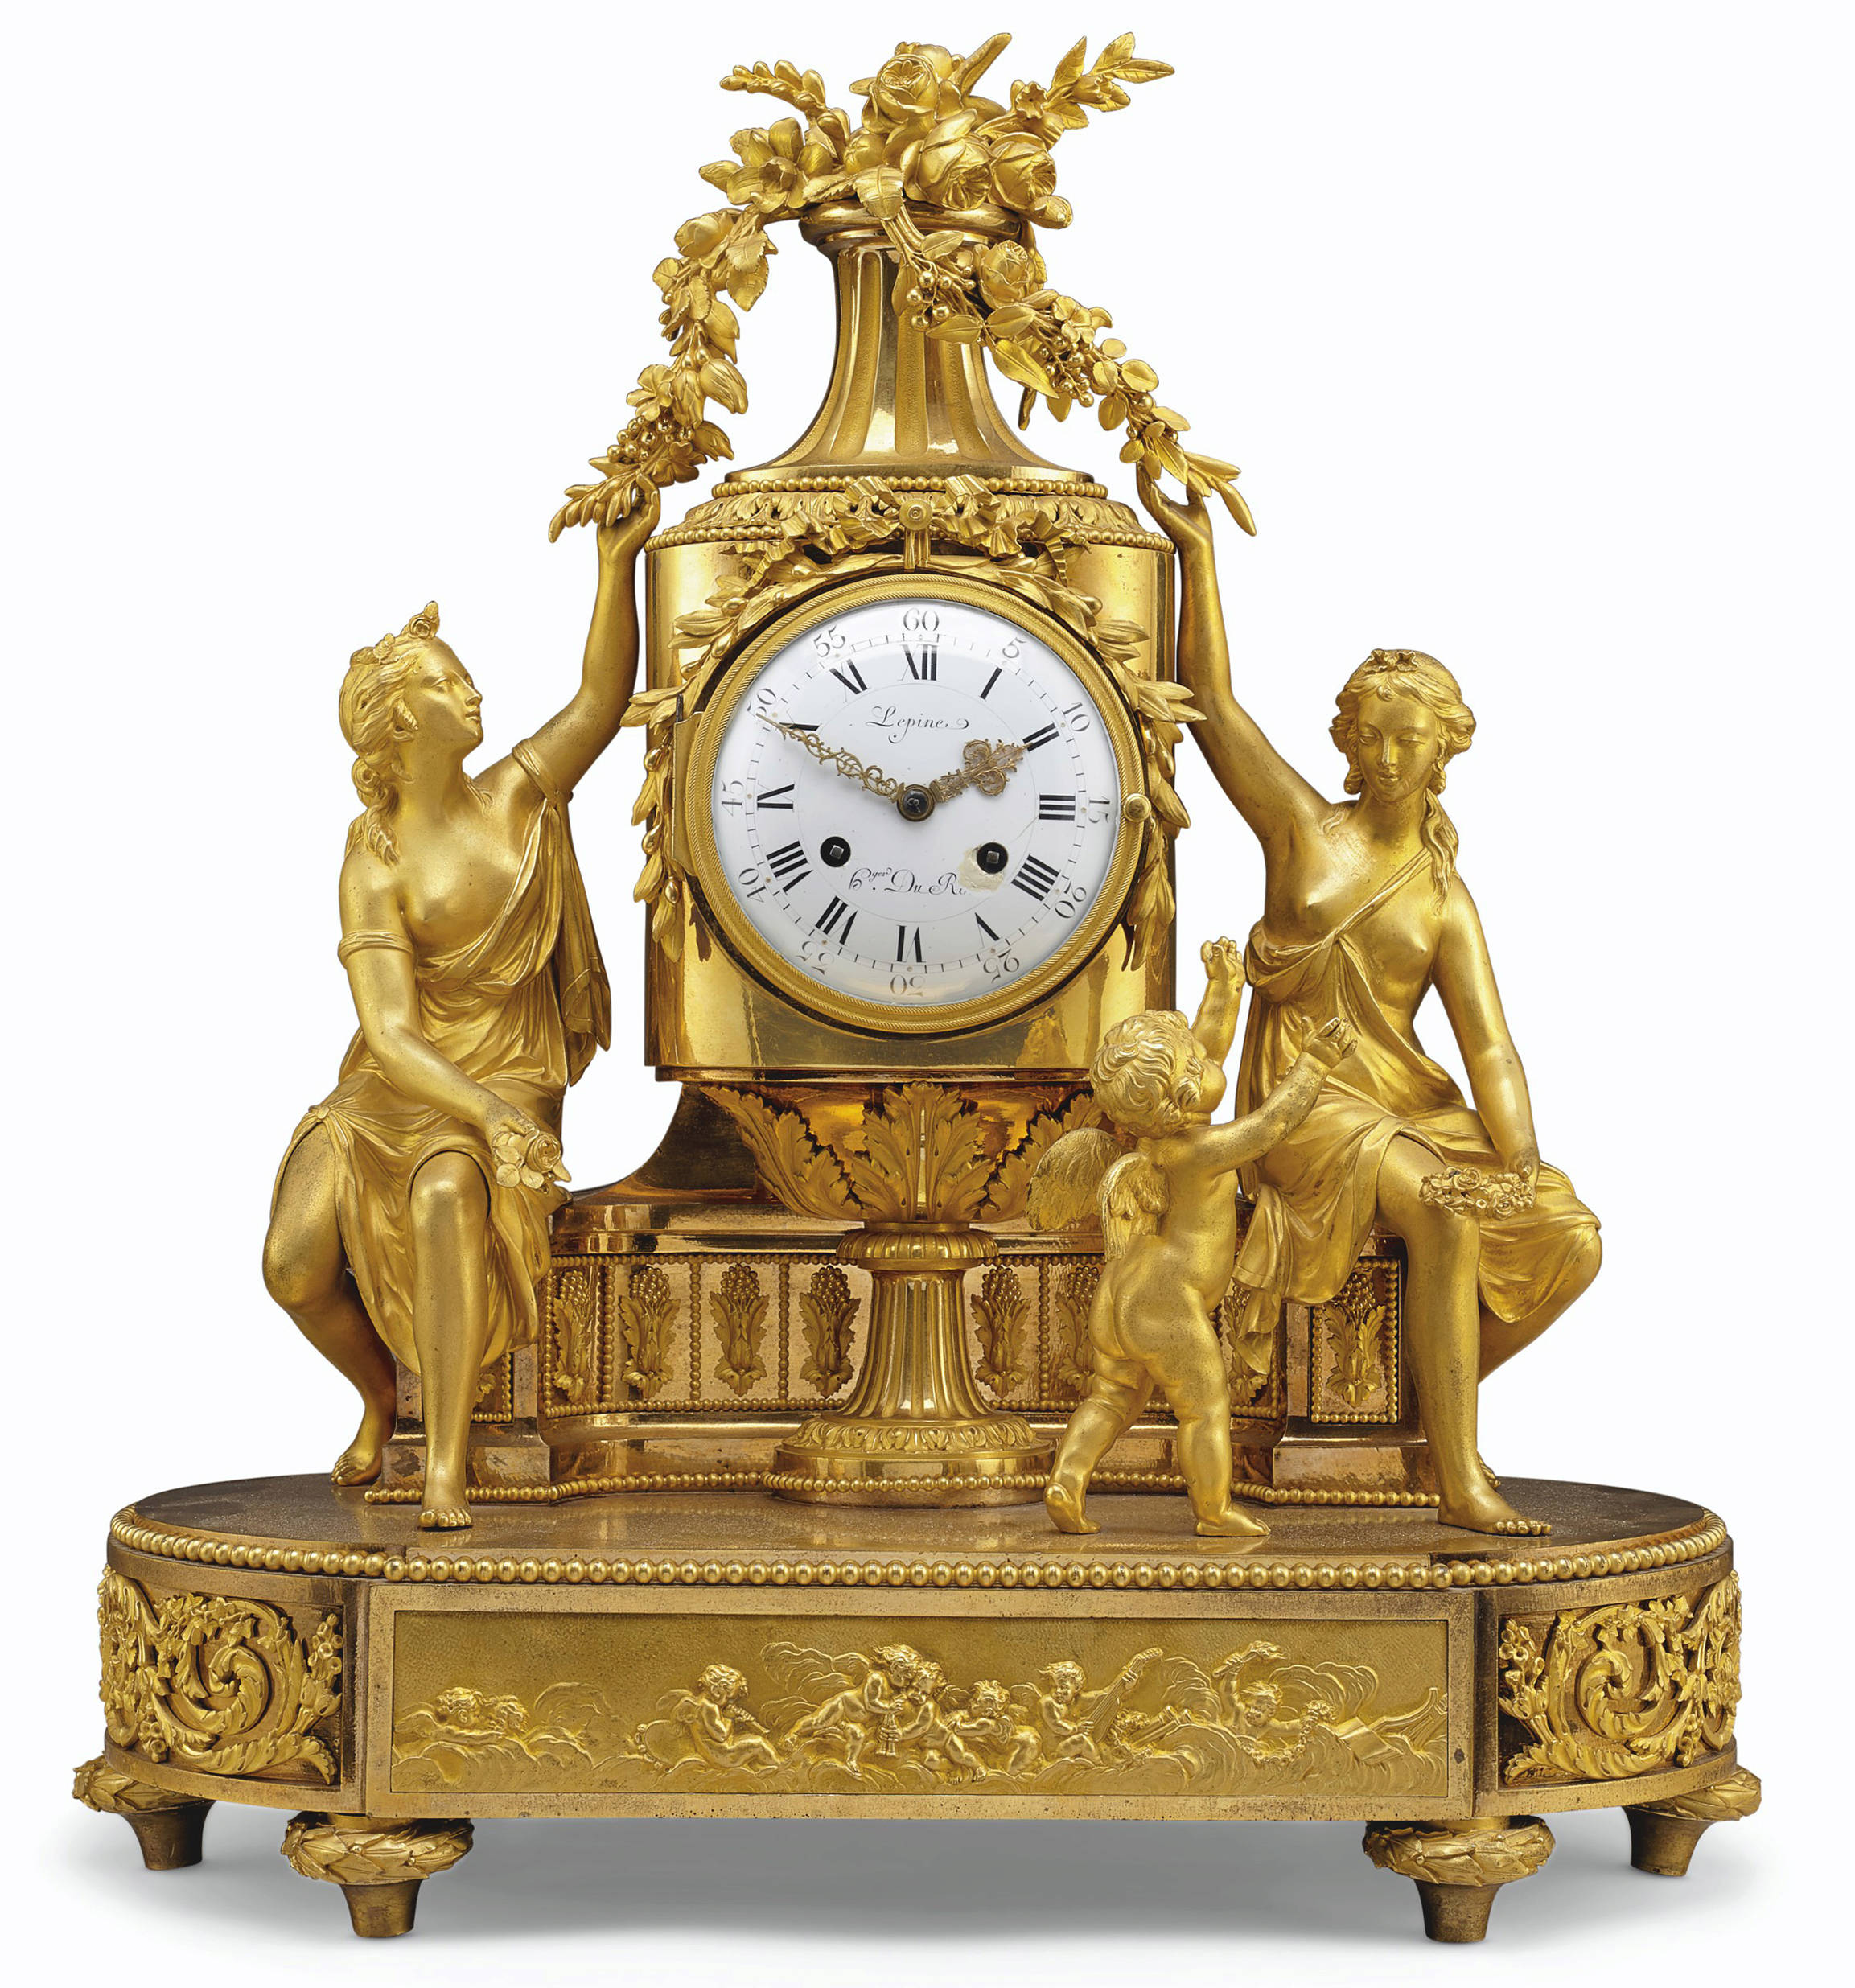 Horloges et pendules du XVIIIe siècle - Page 2 2020_n54